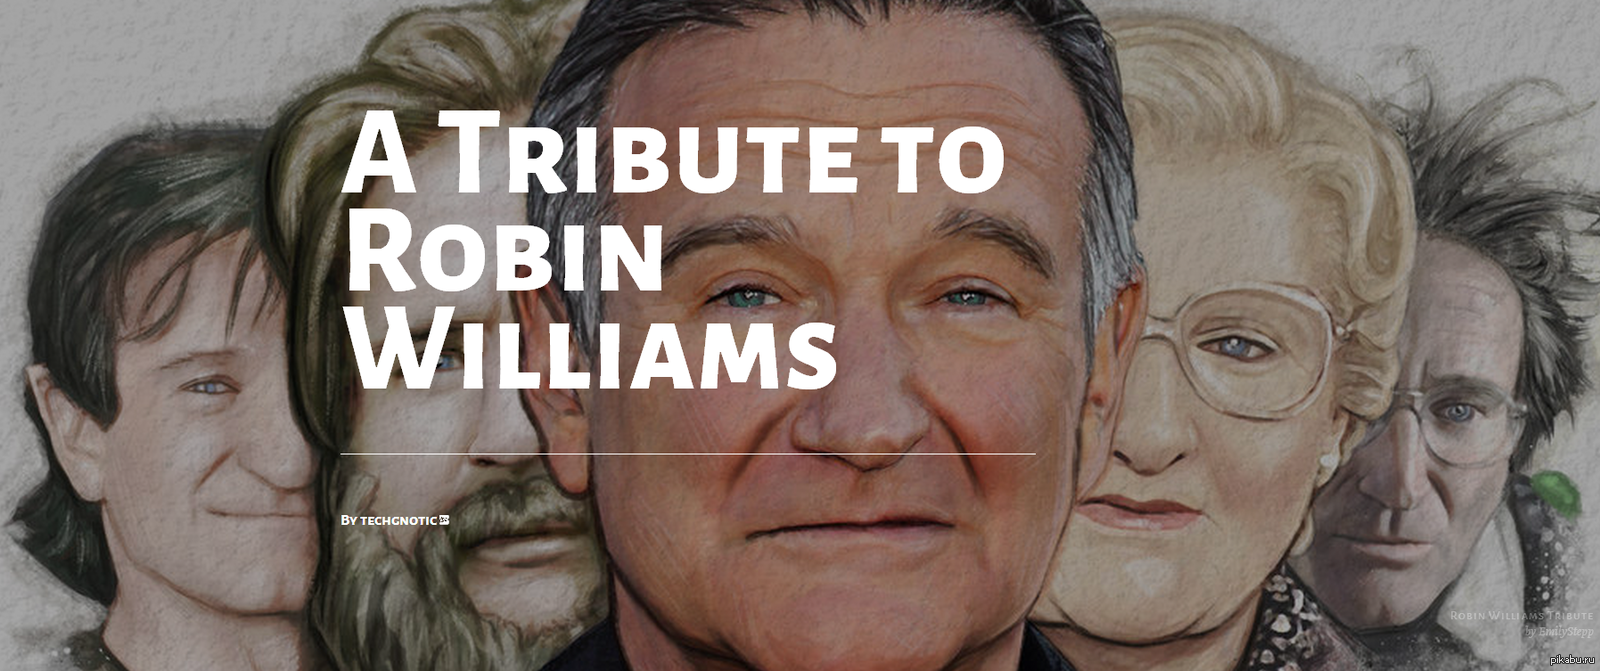 A Tribute to Robin Williams  by techgnotic - Art, Deviantart, Robin Williams, Not mine, Fan art, From the network, Fanart